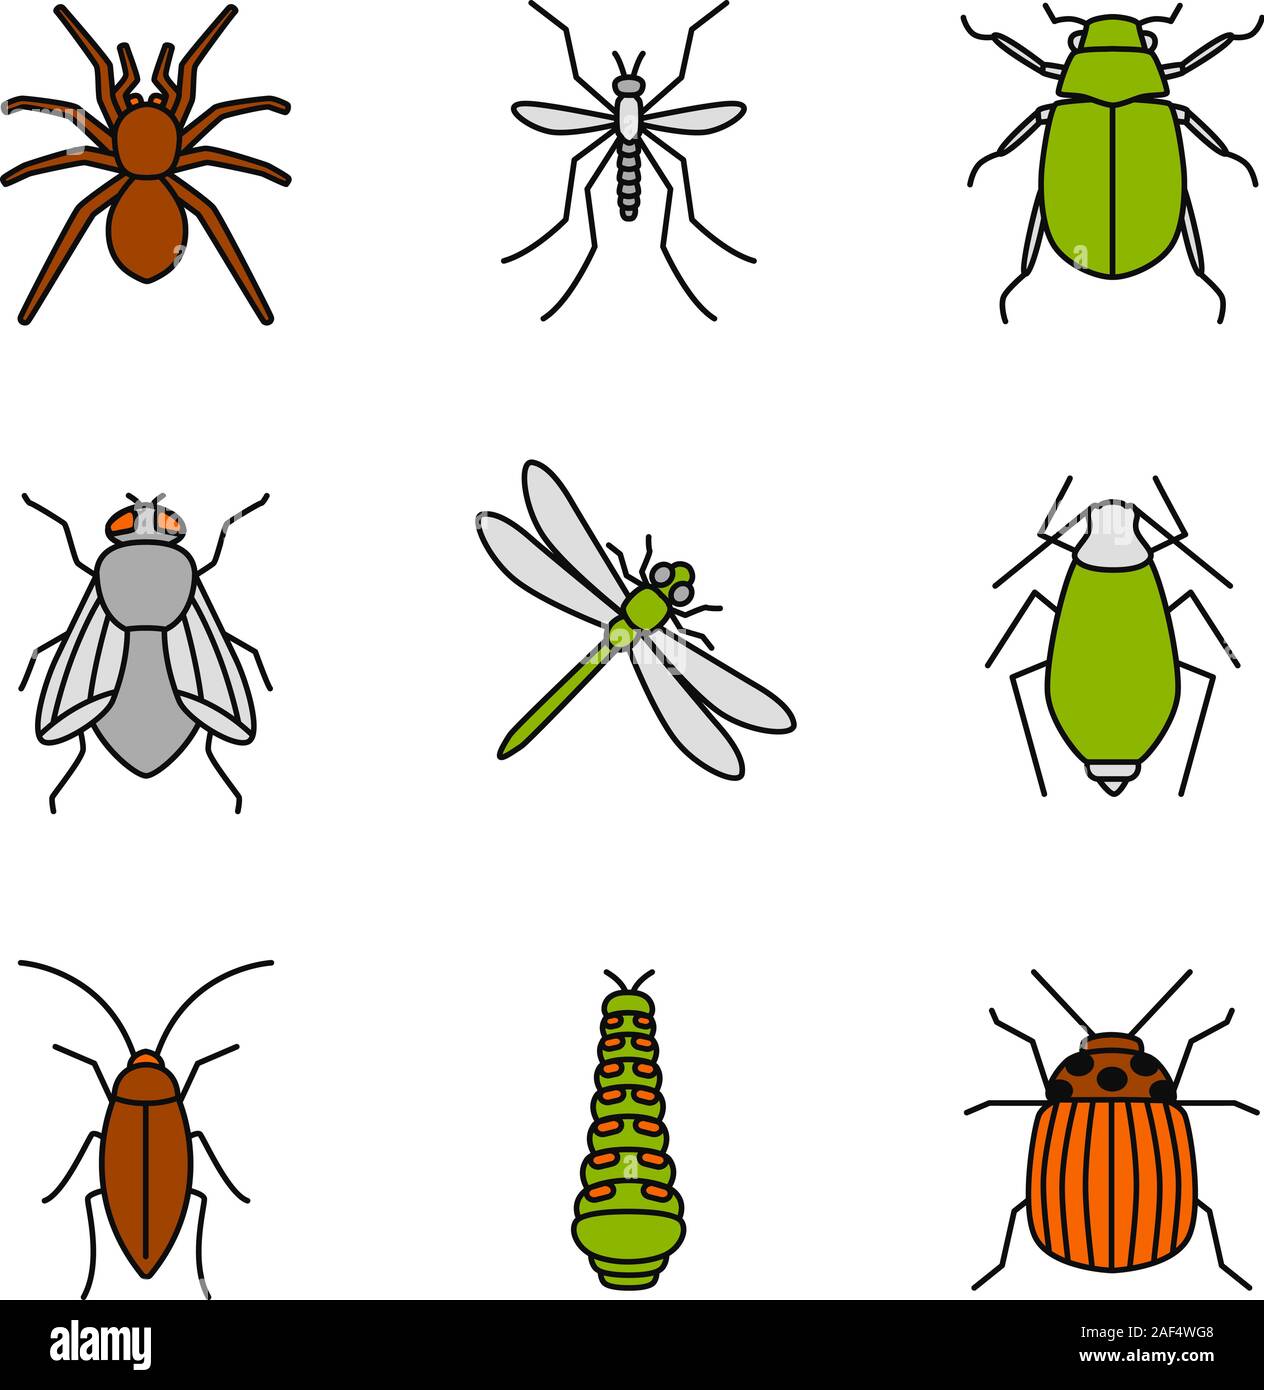 Insekten farbige Symbole gesetzt. Spider, Mosquito, maybug, Kakerlake, Stubenfliege, Libelle, Bluter, Caterpillar, Colorado bug. Isolierte Vektorgrafiken Stock Vektor